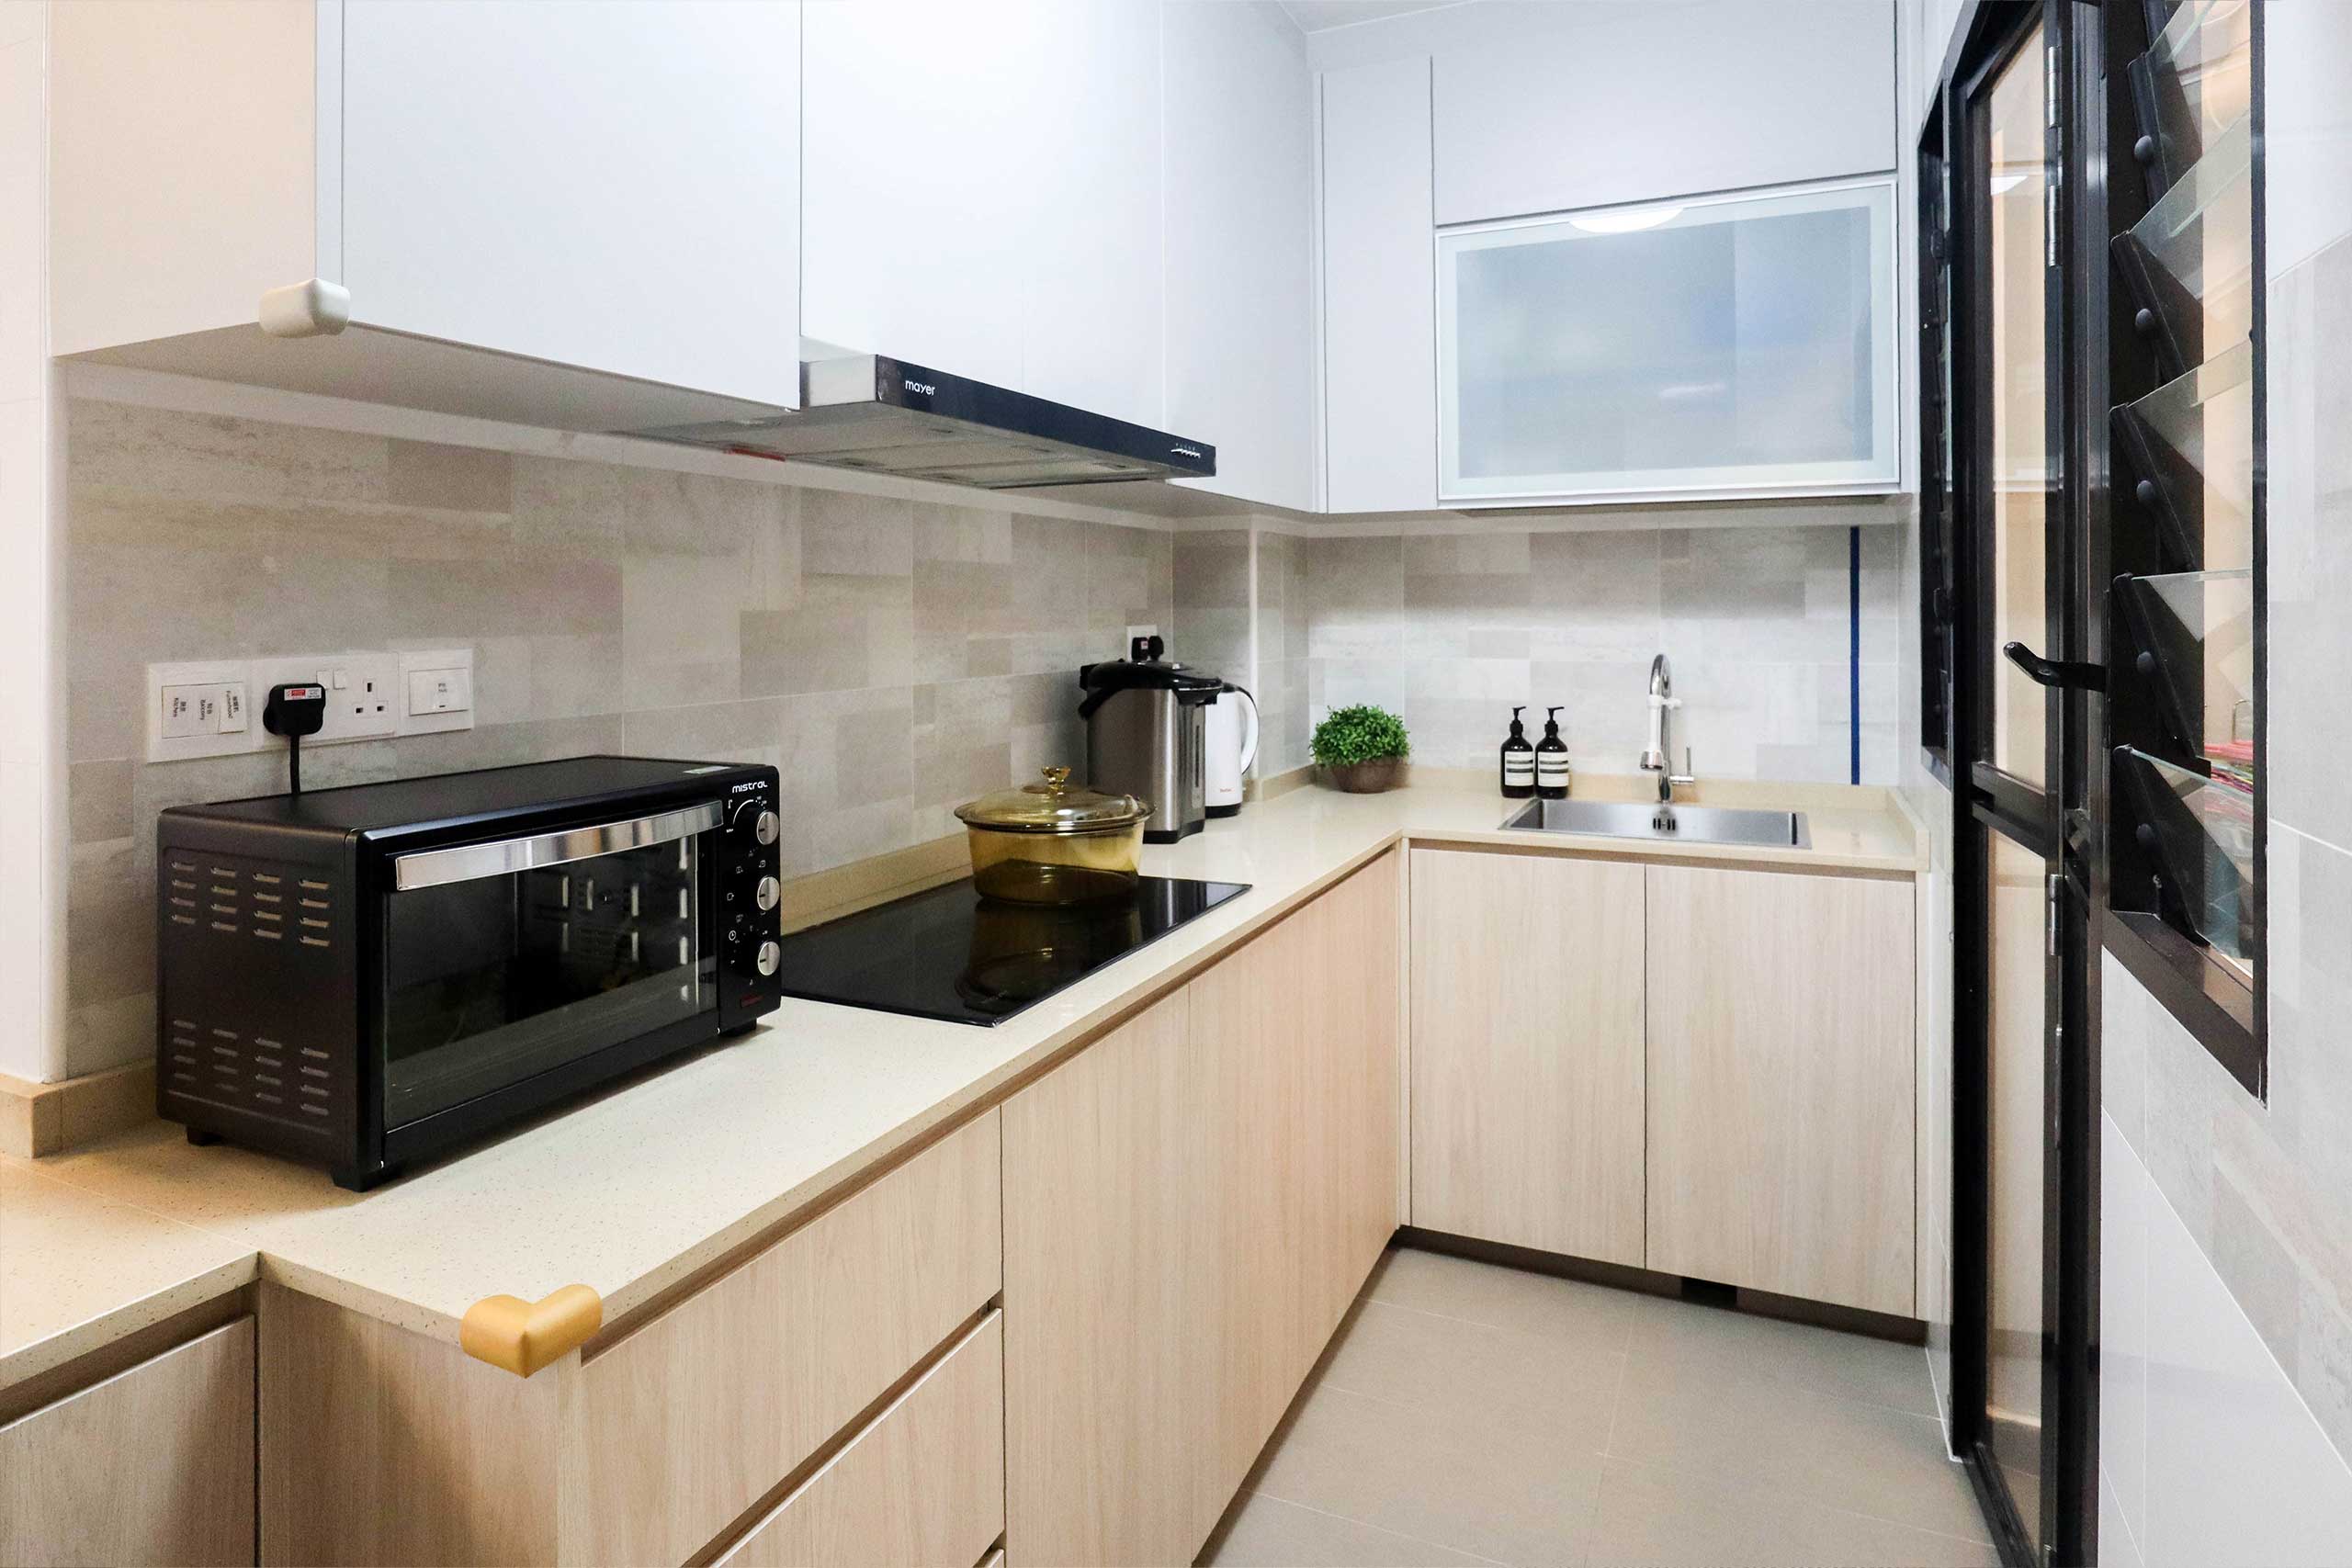 Small kitchen HDB BTO interior design l-shaped cabinet design handless doors